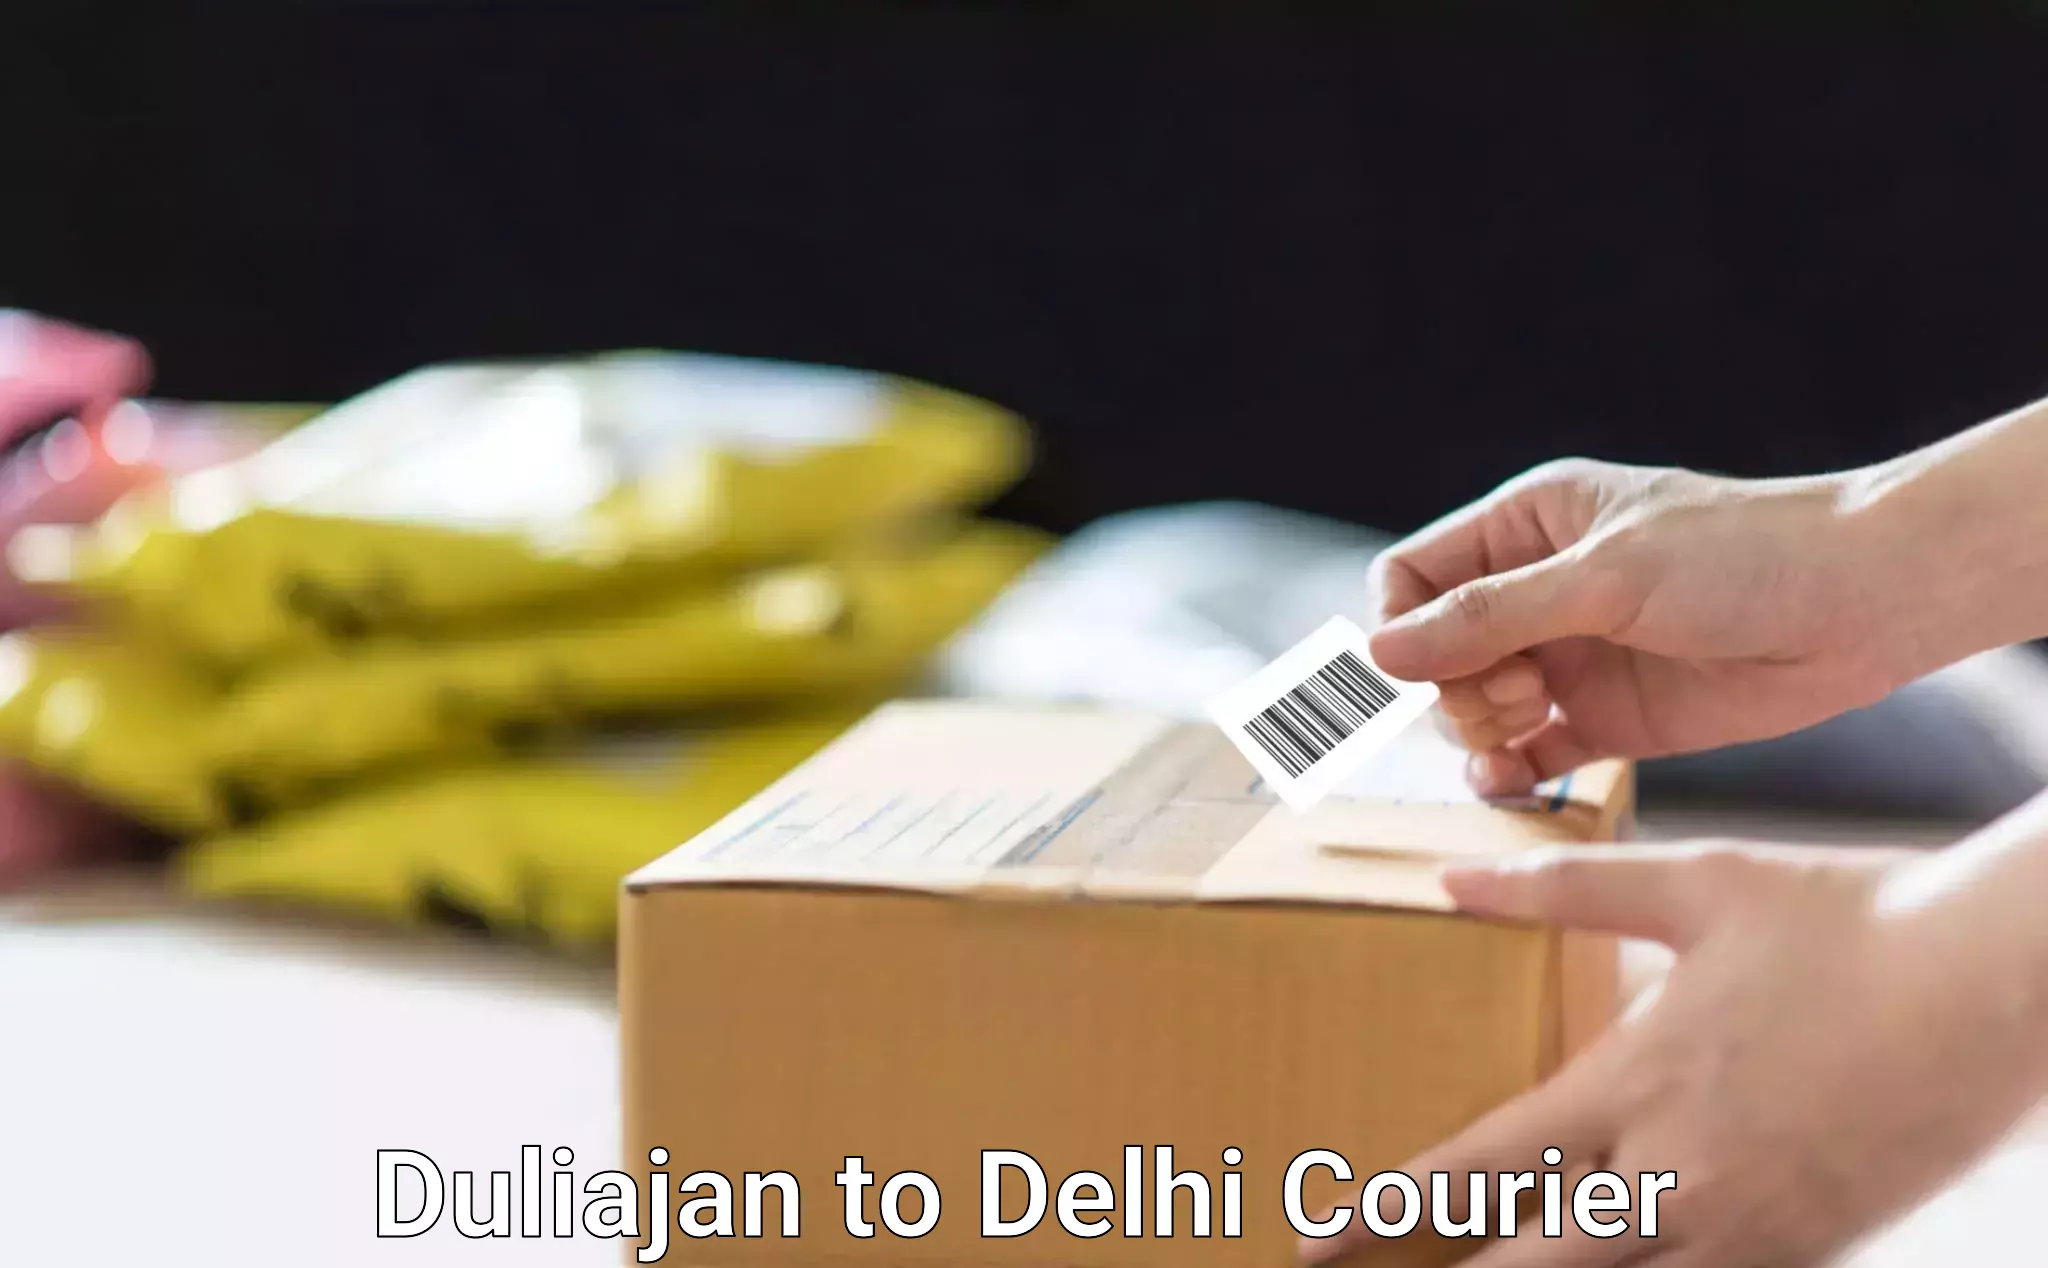 Parcel handling and care Duliajan to Delhi